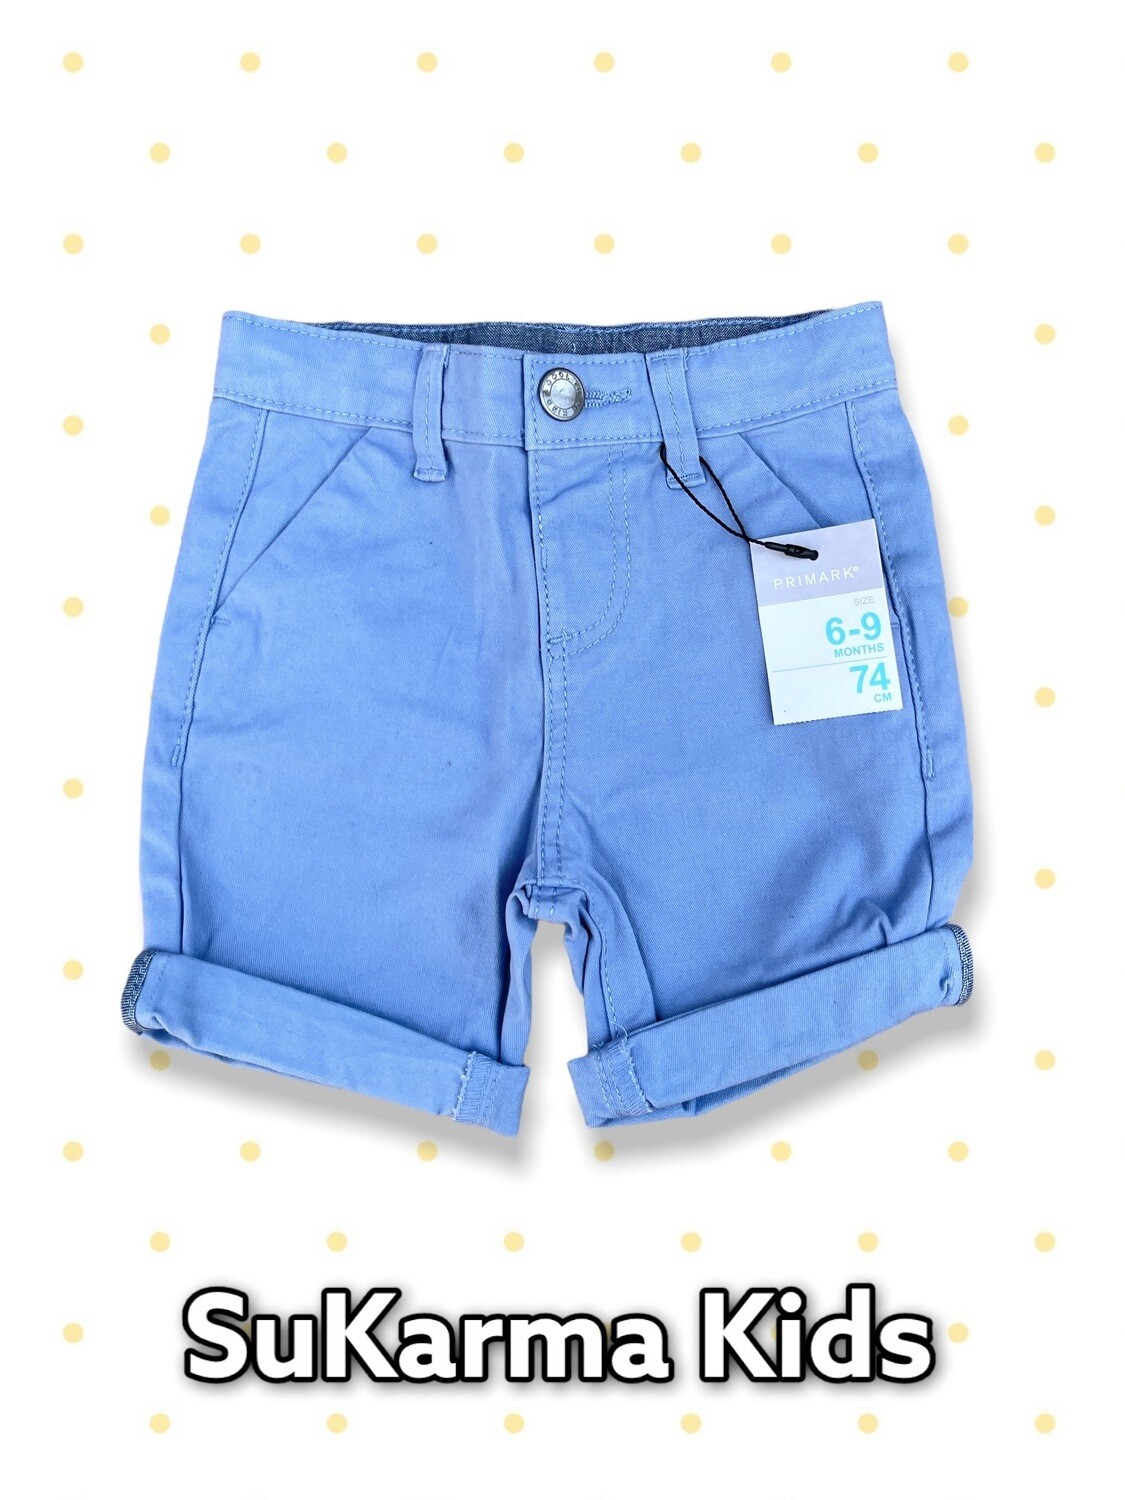 *SALES*Pantalón corto PRIMARK Talla 6-9 meses (74cm)